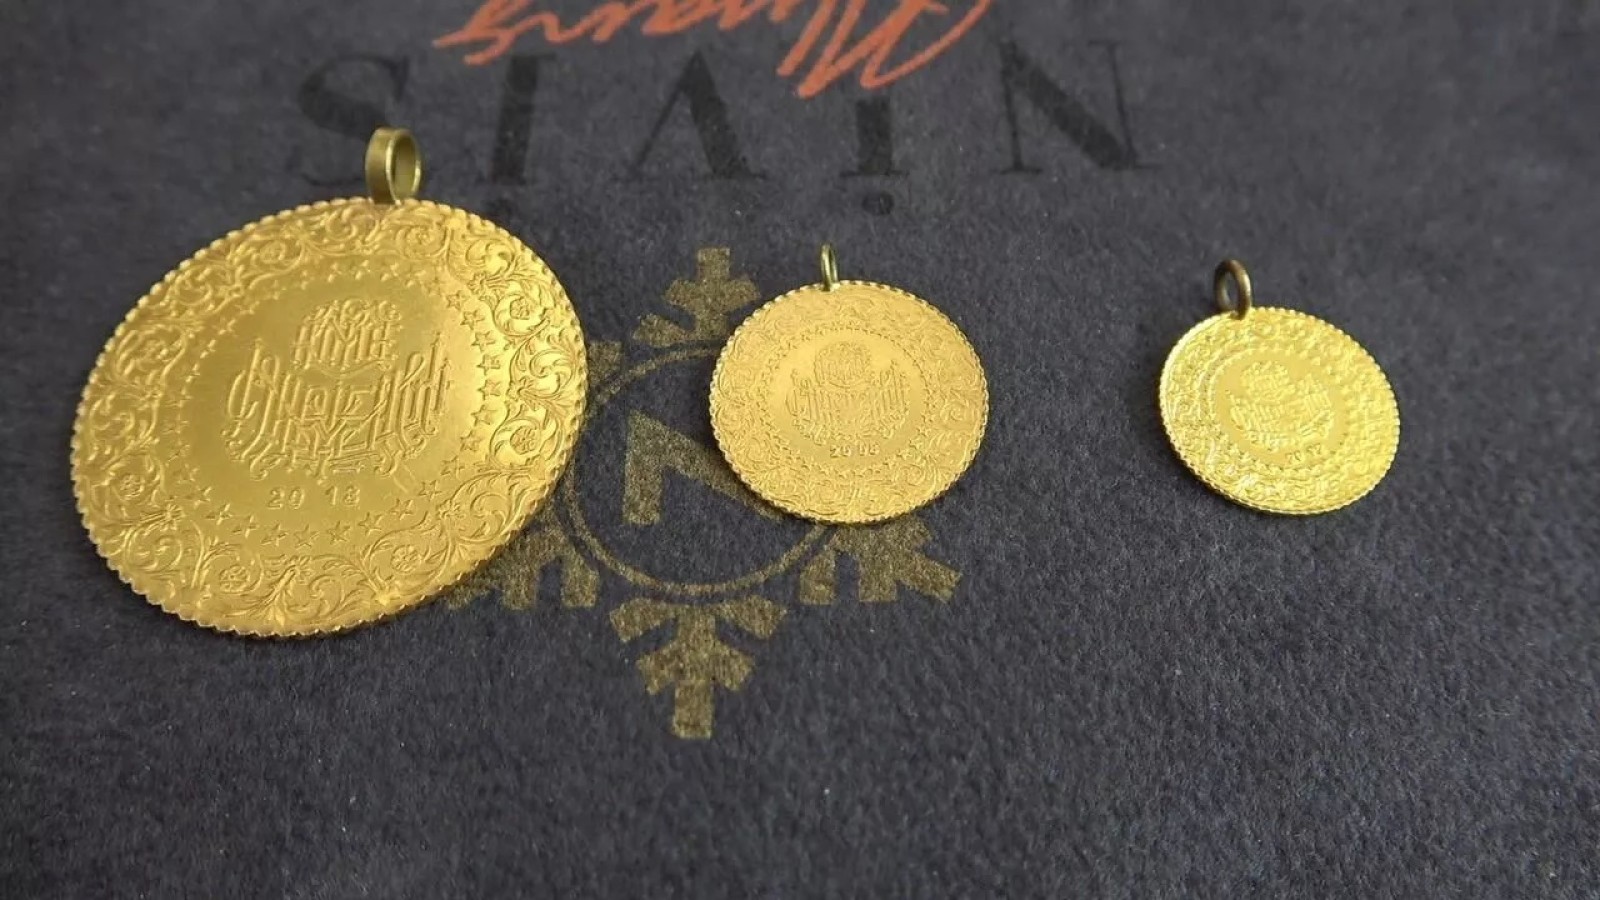 Altının gram fiyatı 1500 lira sınırında